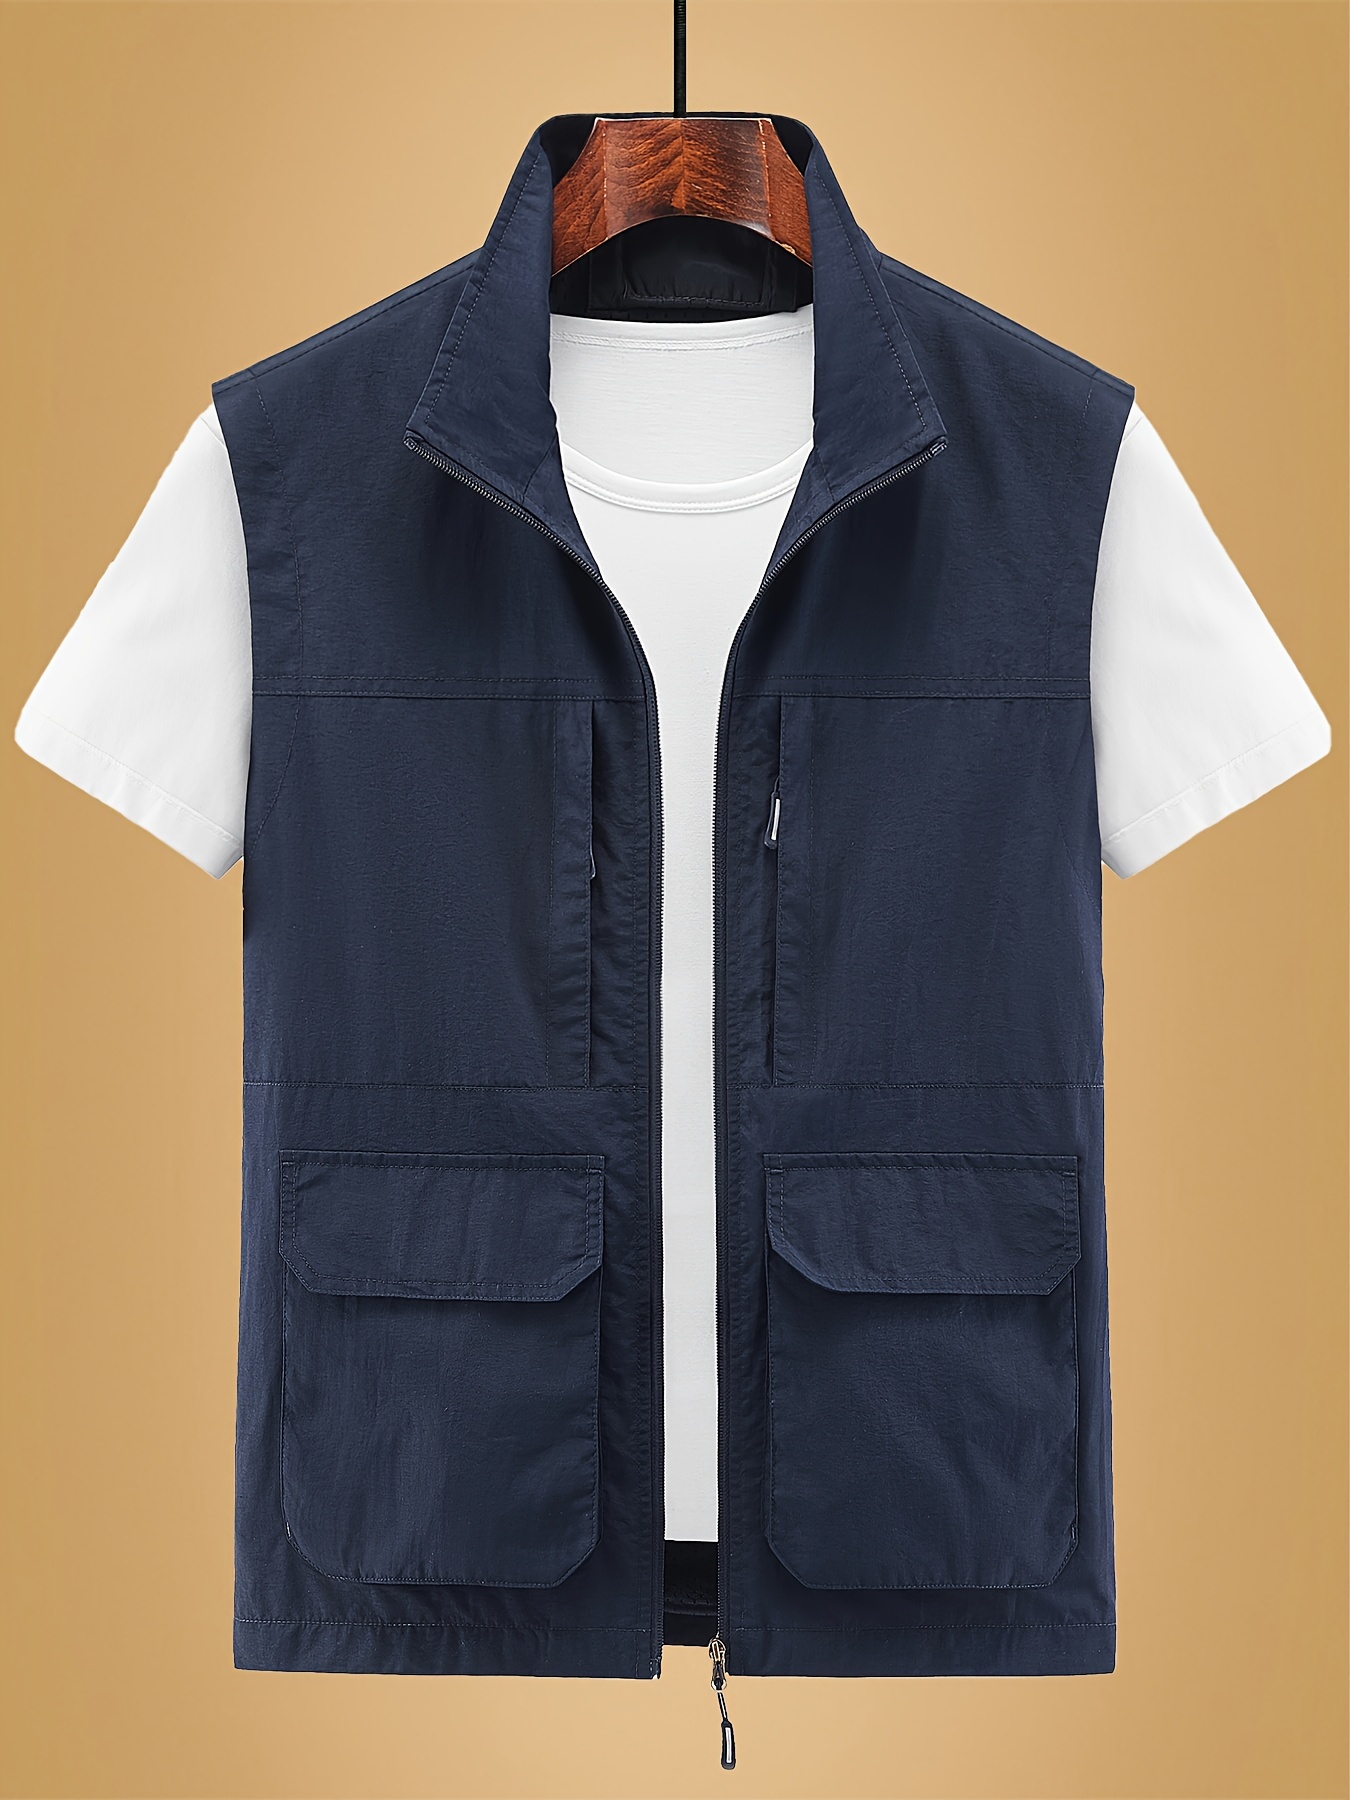 Men's Outdoor Fishing Vest Casual Work Mesh Vests Breathable